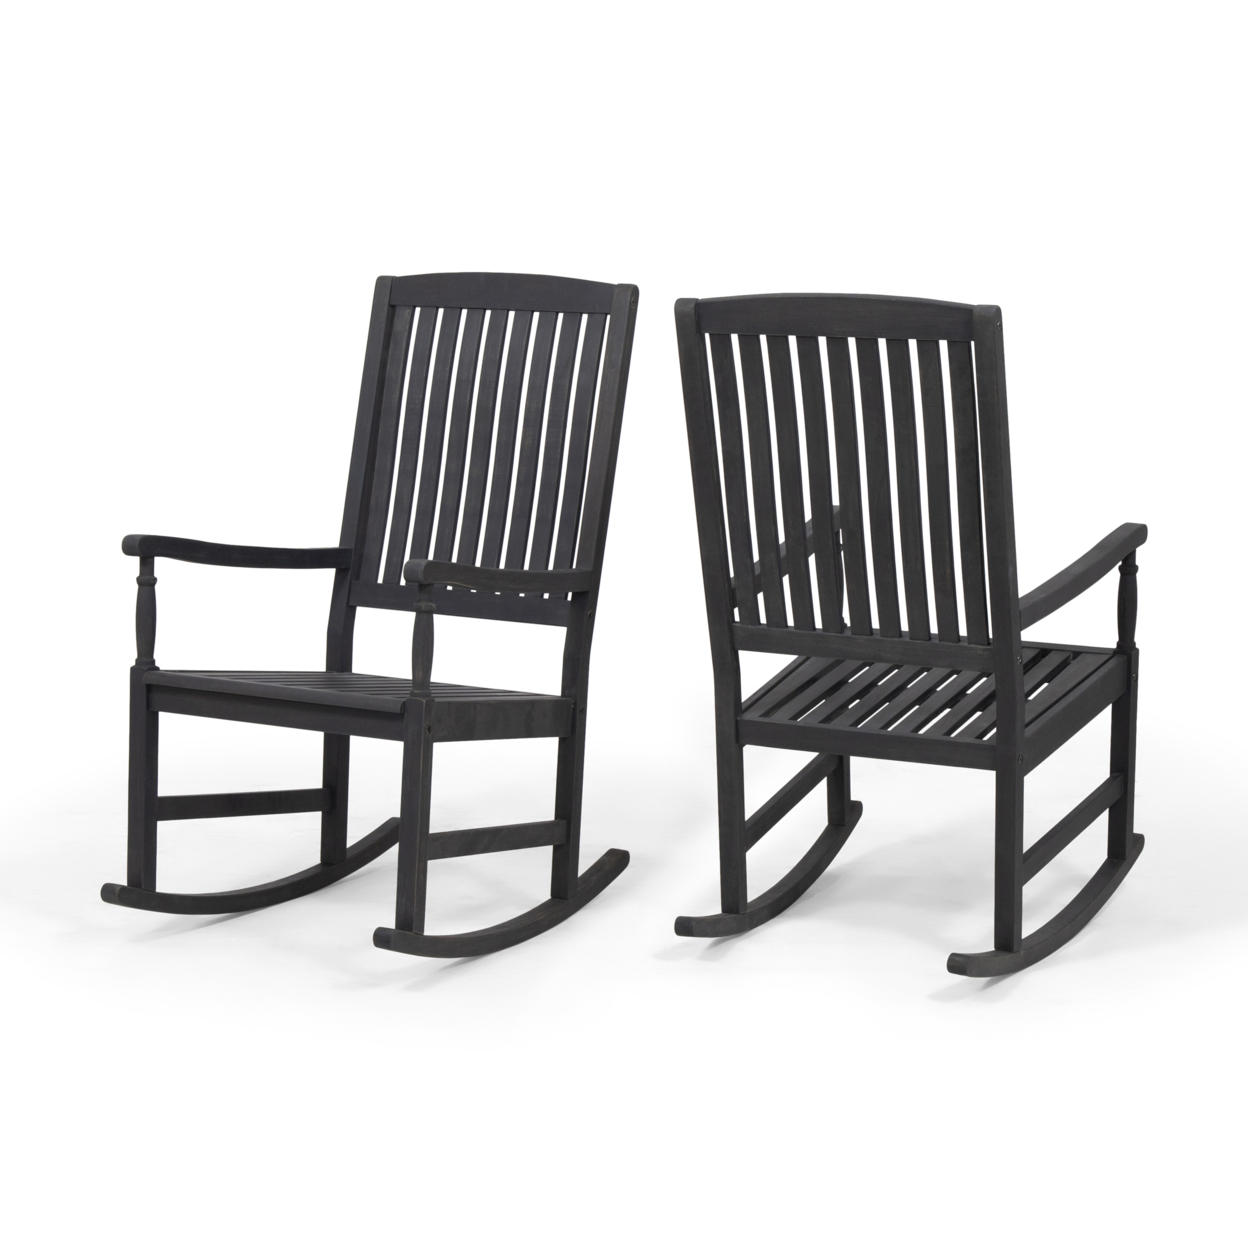 Penny Outdoor Acacia Wood Rocking Chairs (Set Of 2) - Dark Gray Finish